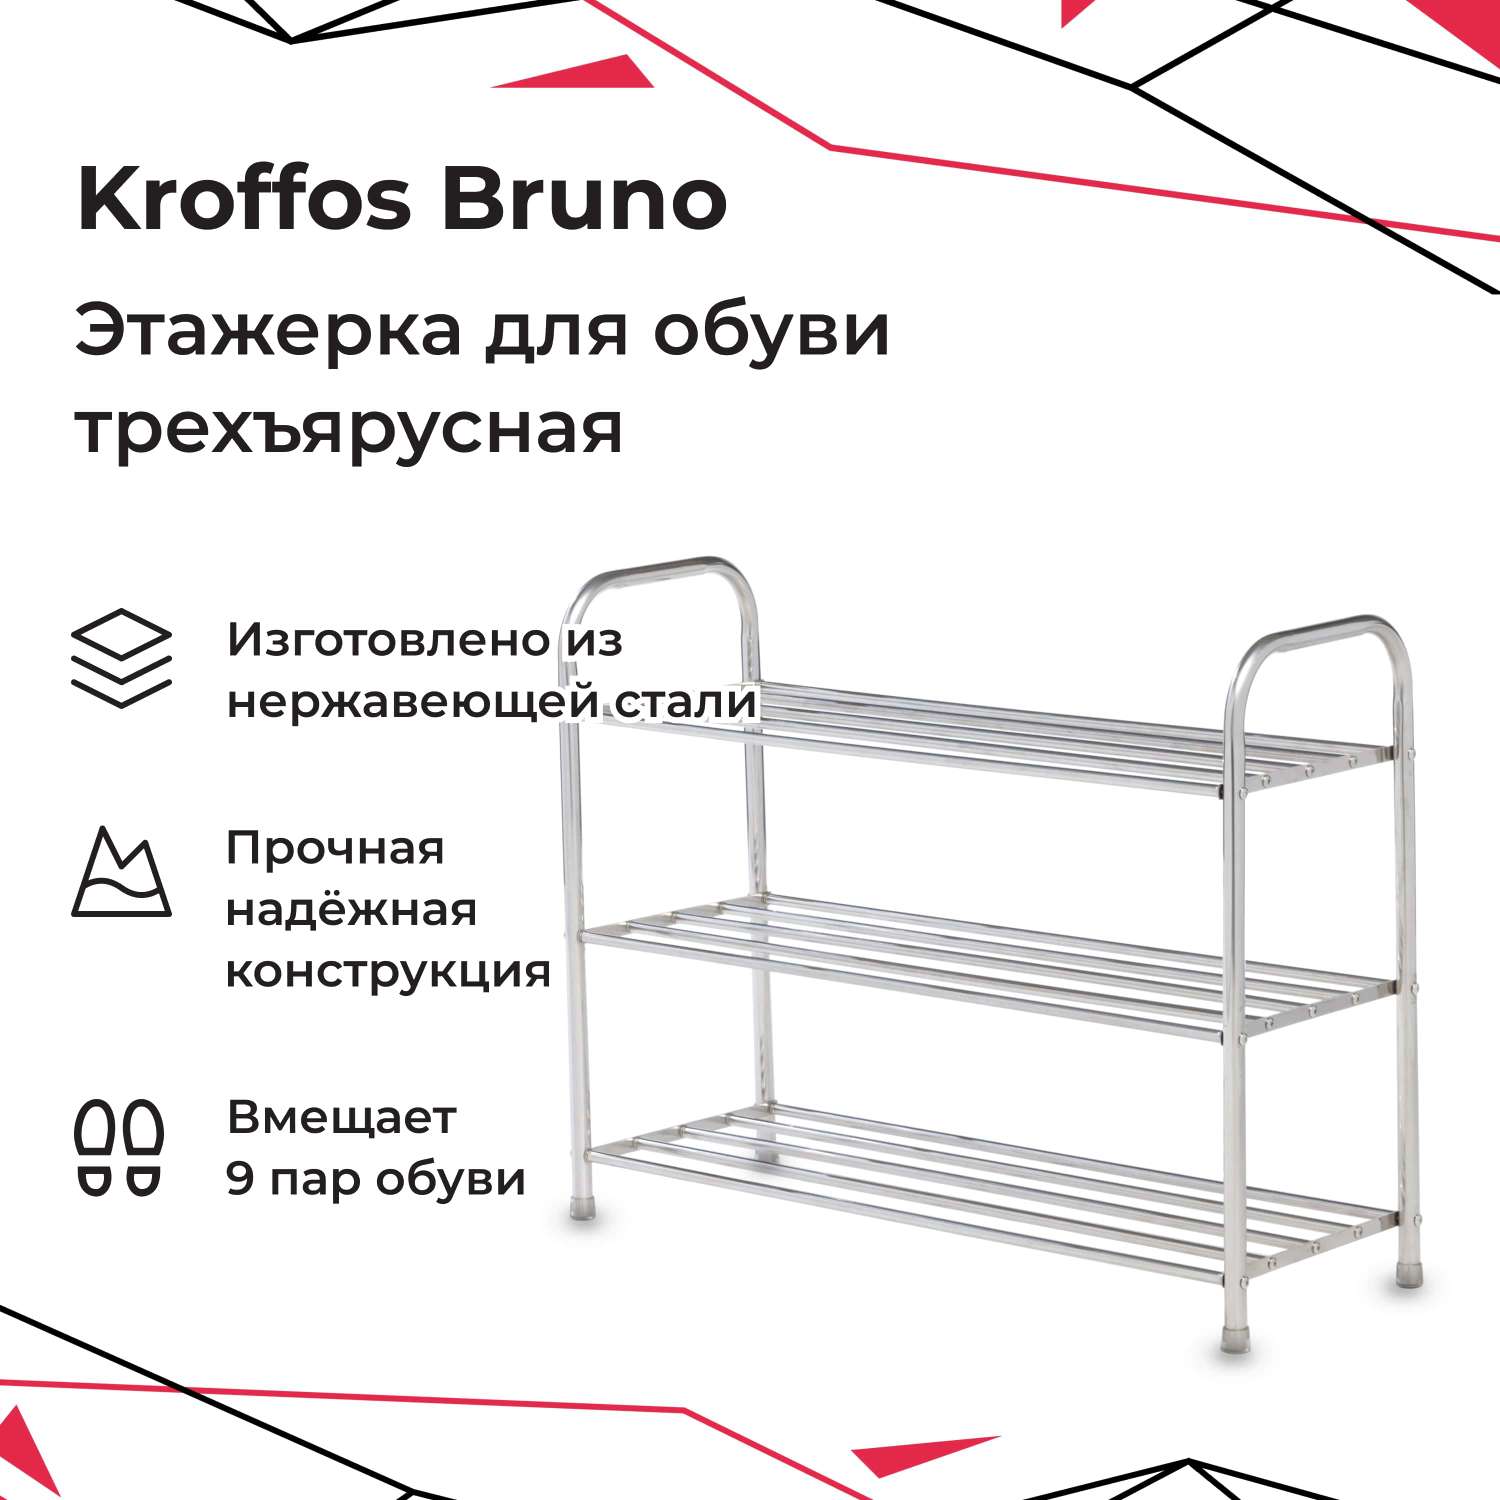 Этажерка для обуви KROFFOS Bruno трехъярусная стальная - фото 1